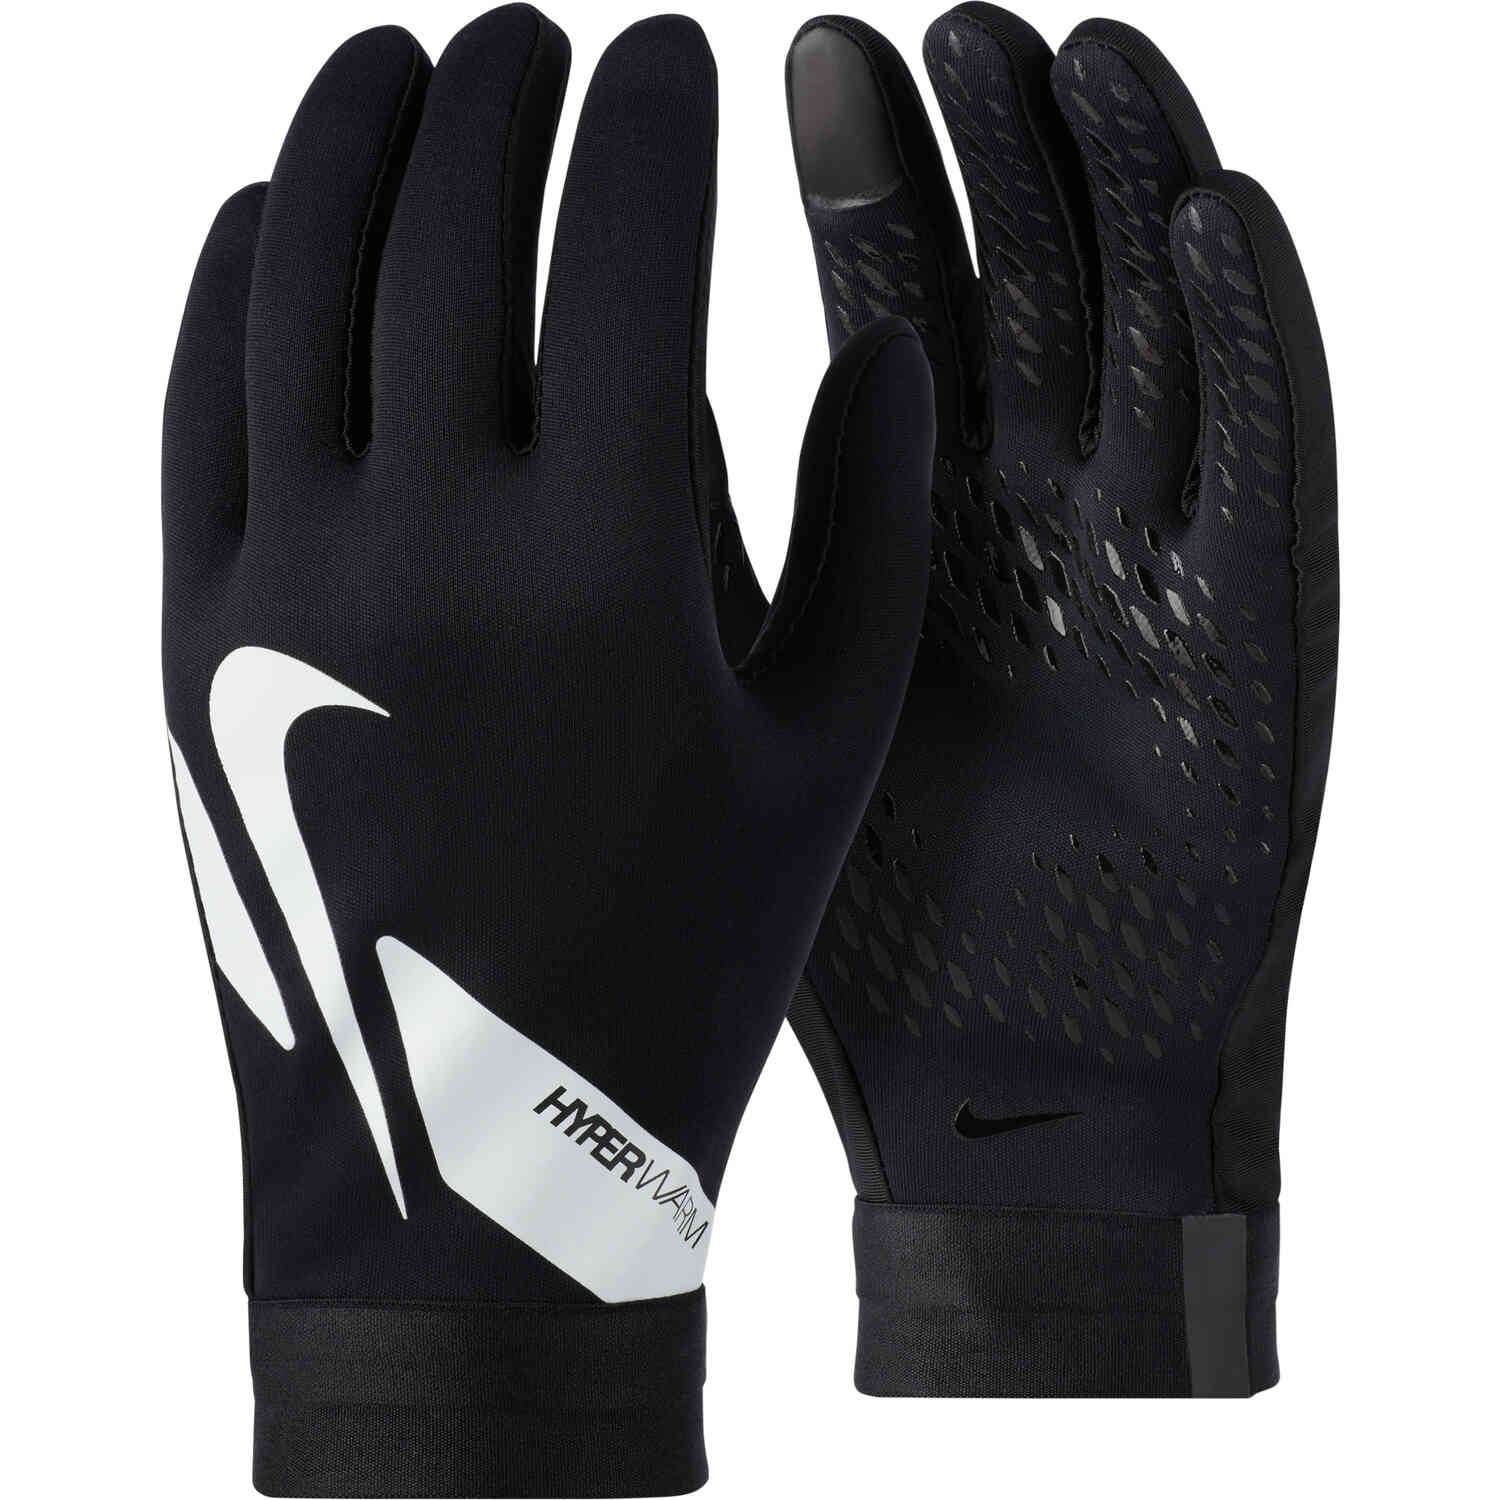 academy hyperwarm gloves